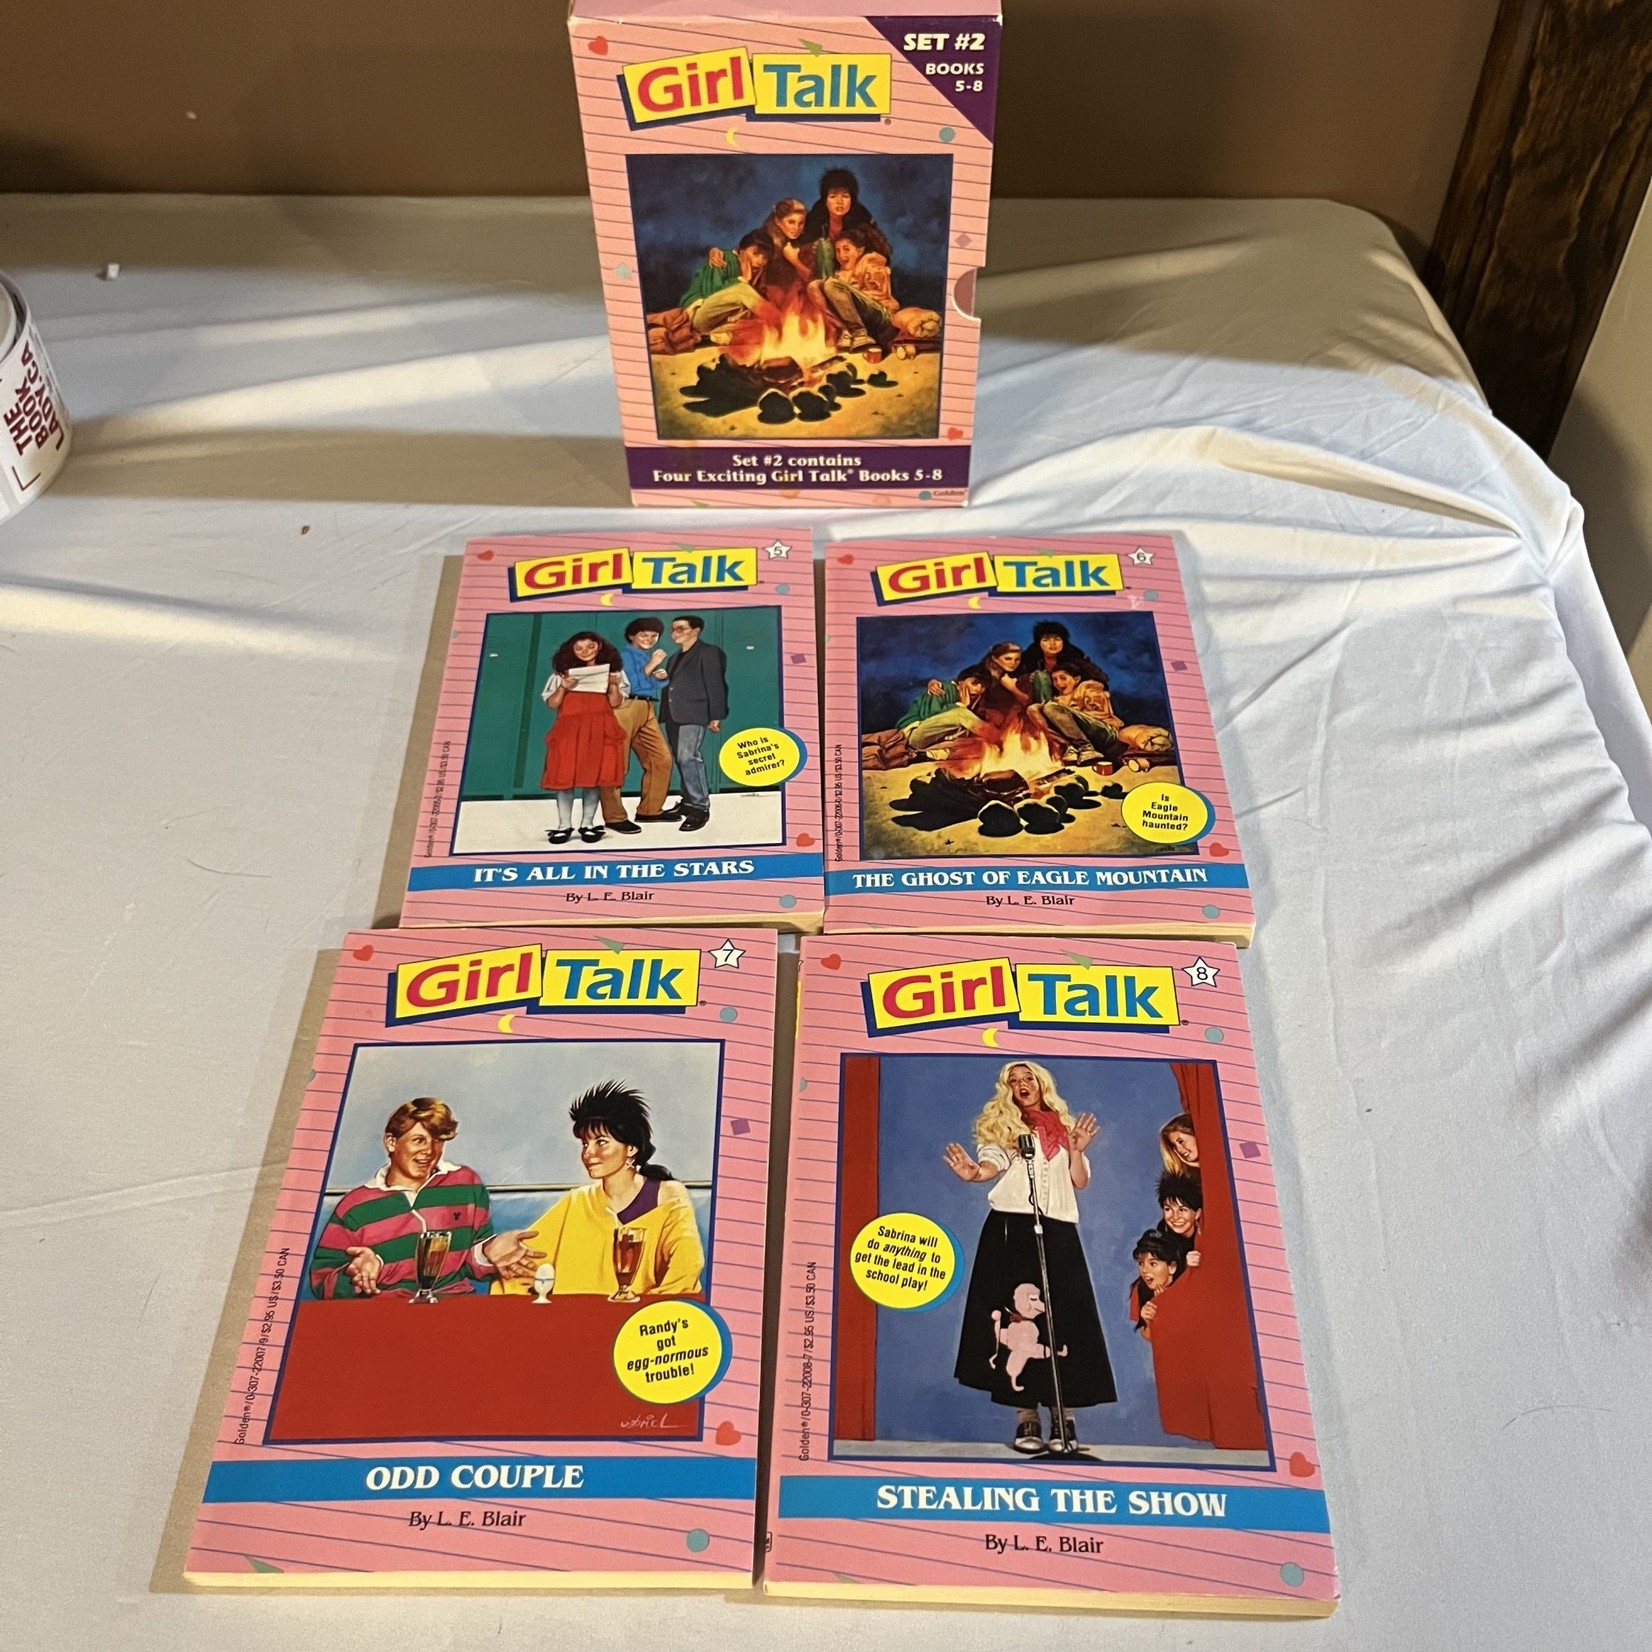 Girl Talk Set #2 Box Set (Books 5-8)